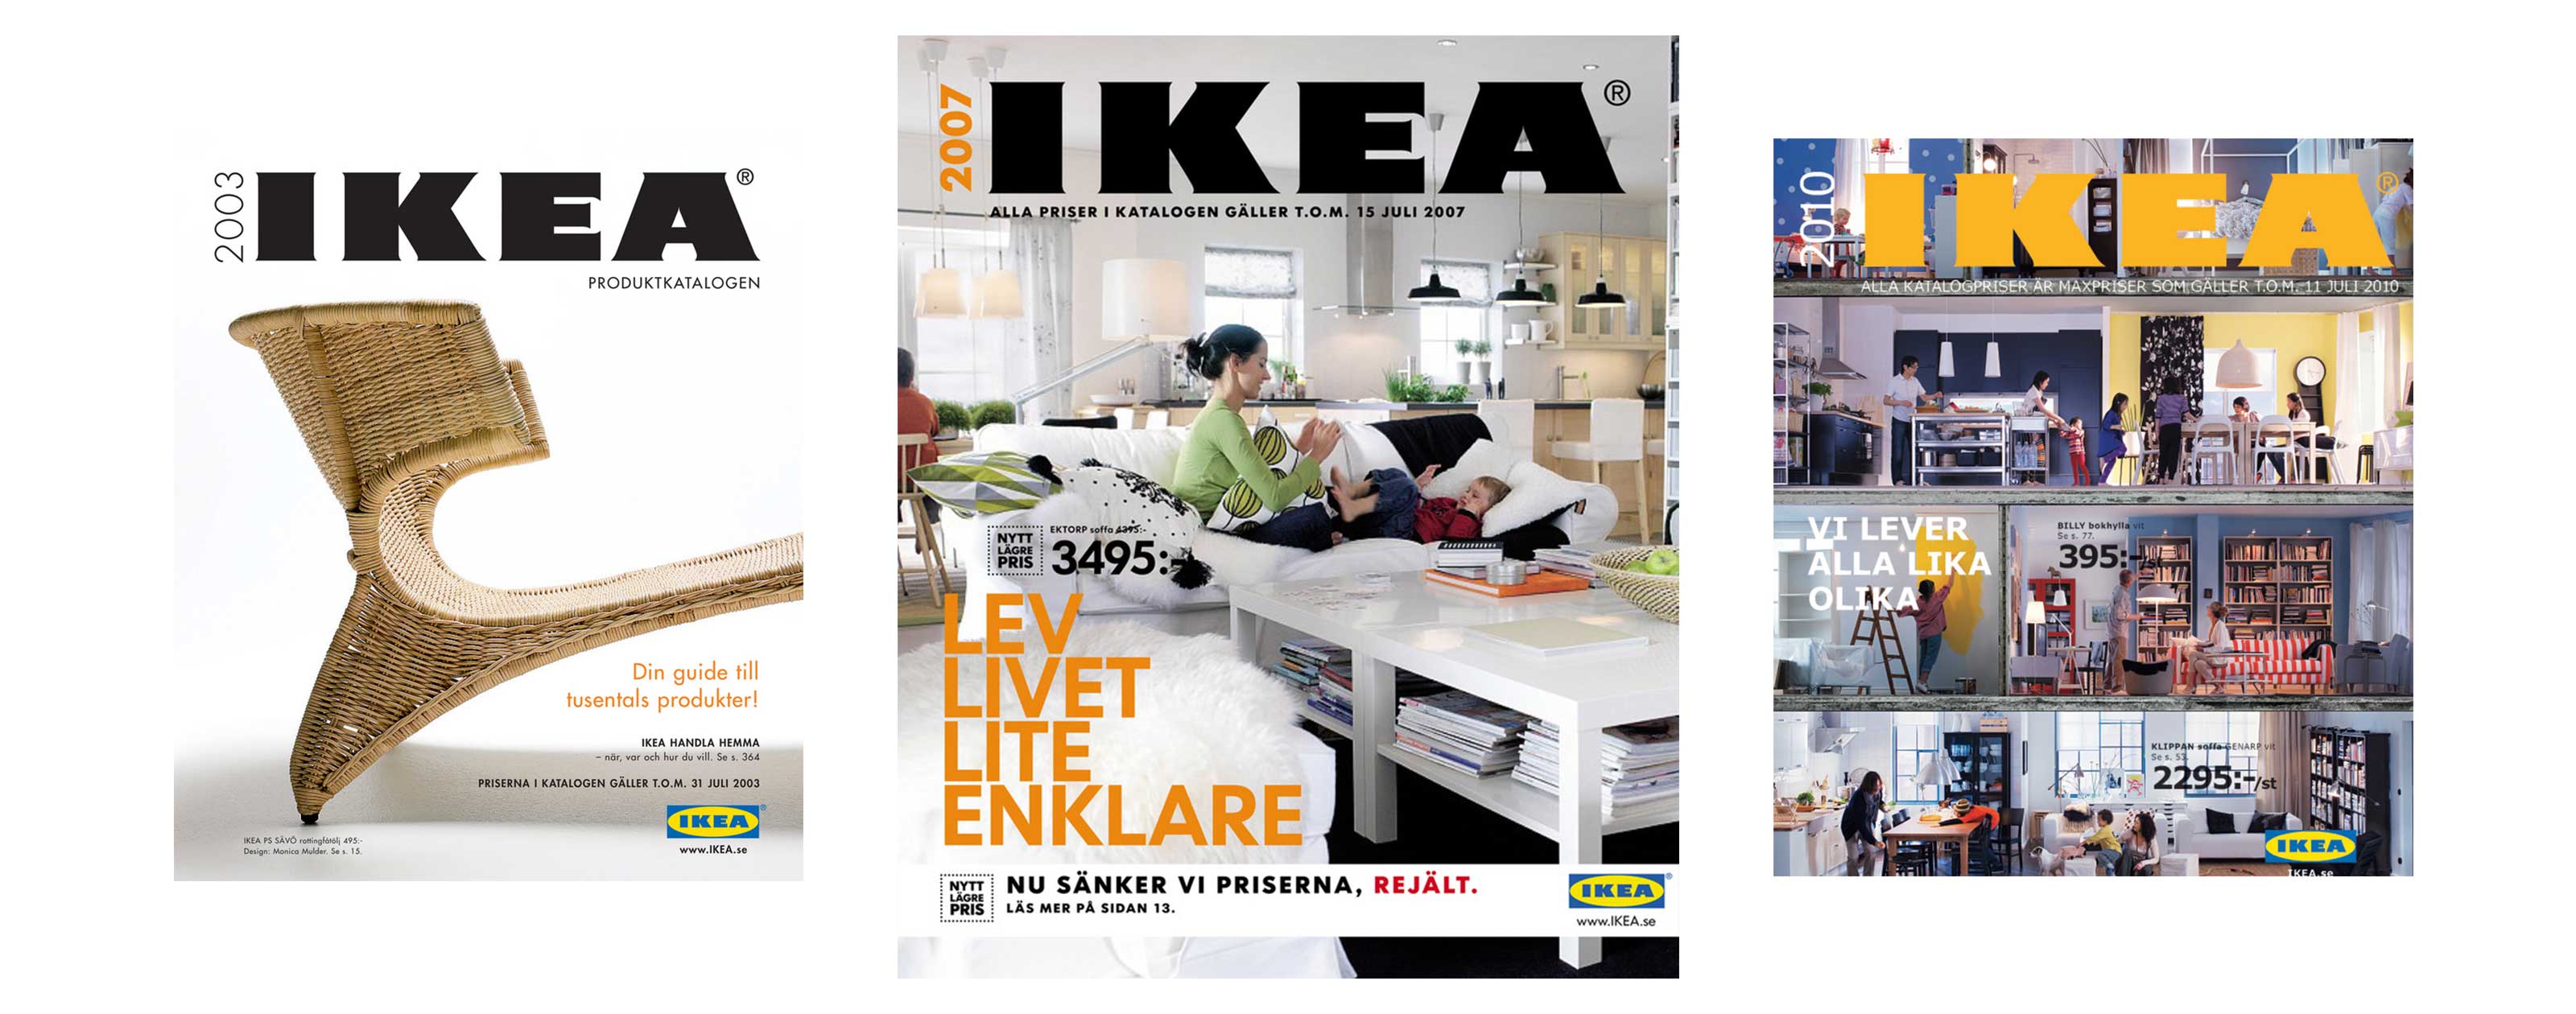 IKEA-slide 6